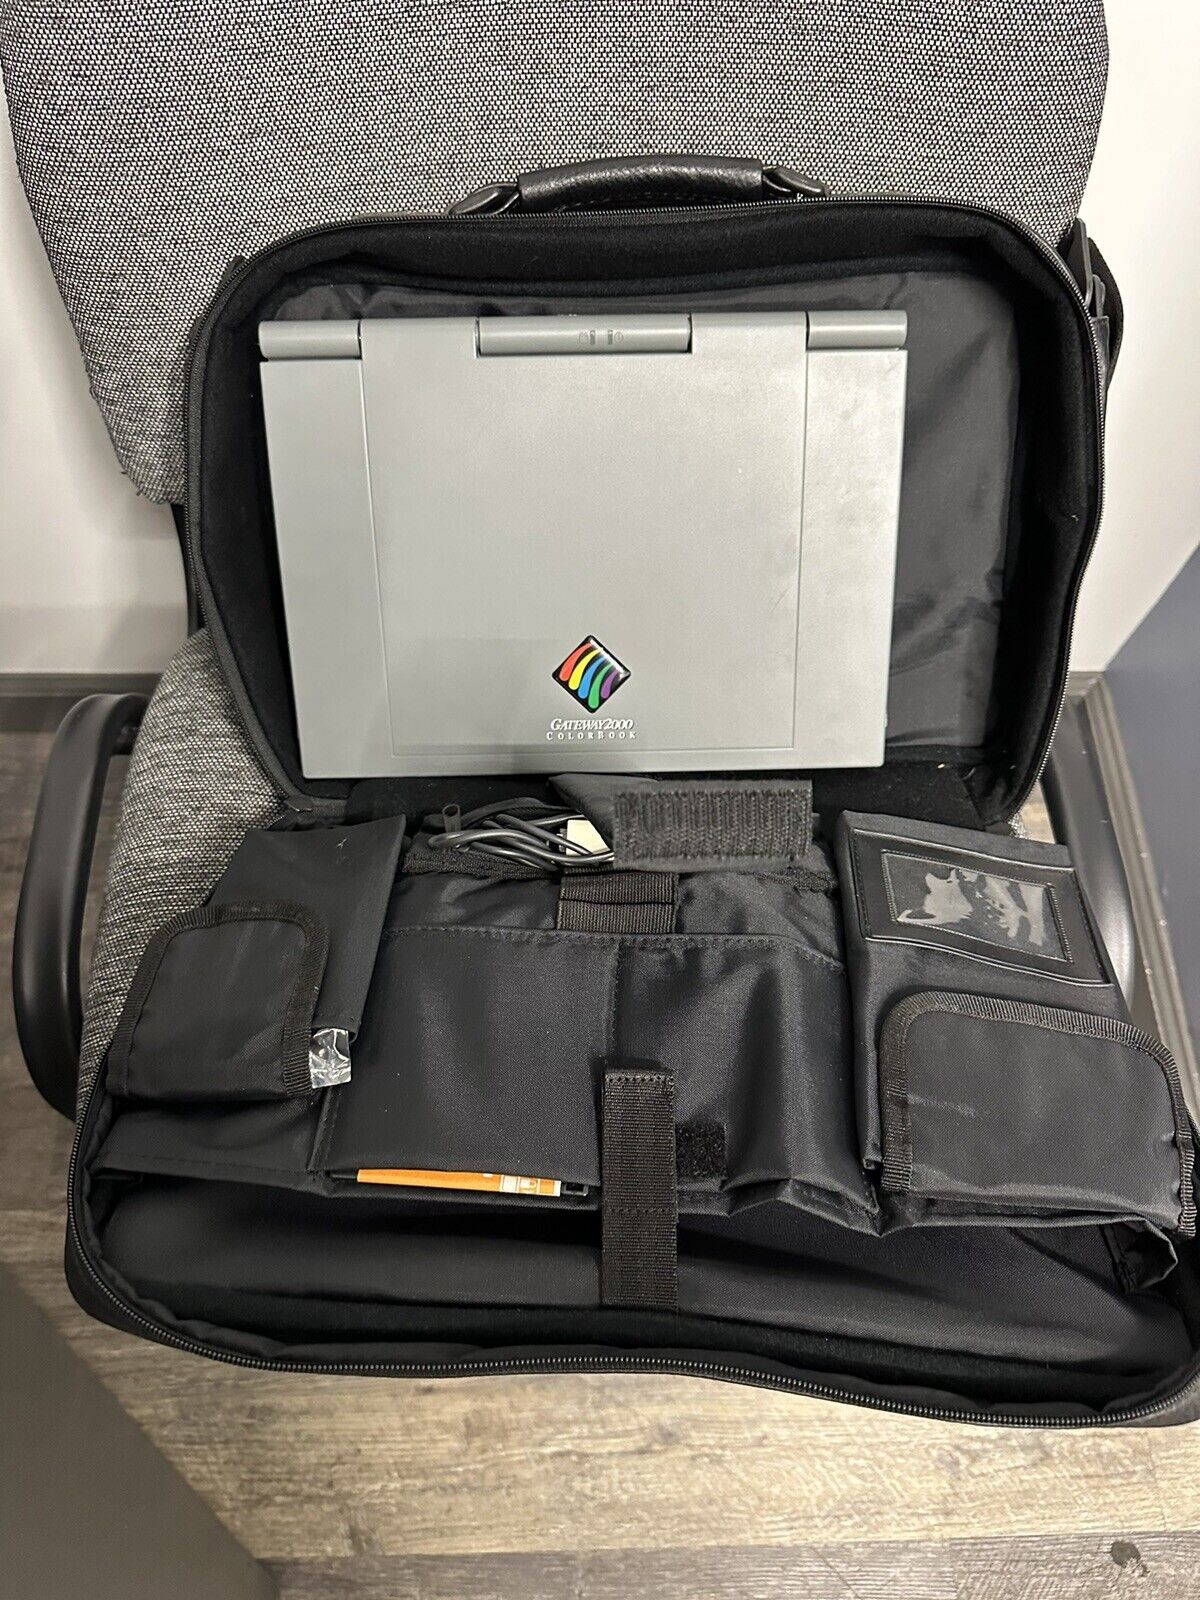 RARE VINTAGE Mint Gateway 2000 Colorbook Laptop 1994 Full Setup Leatherette Bag